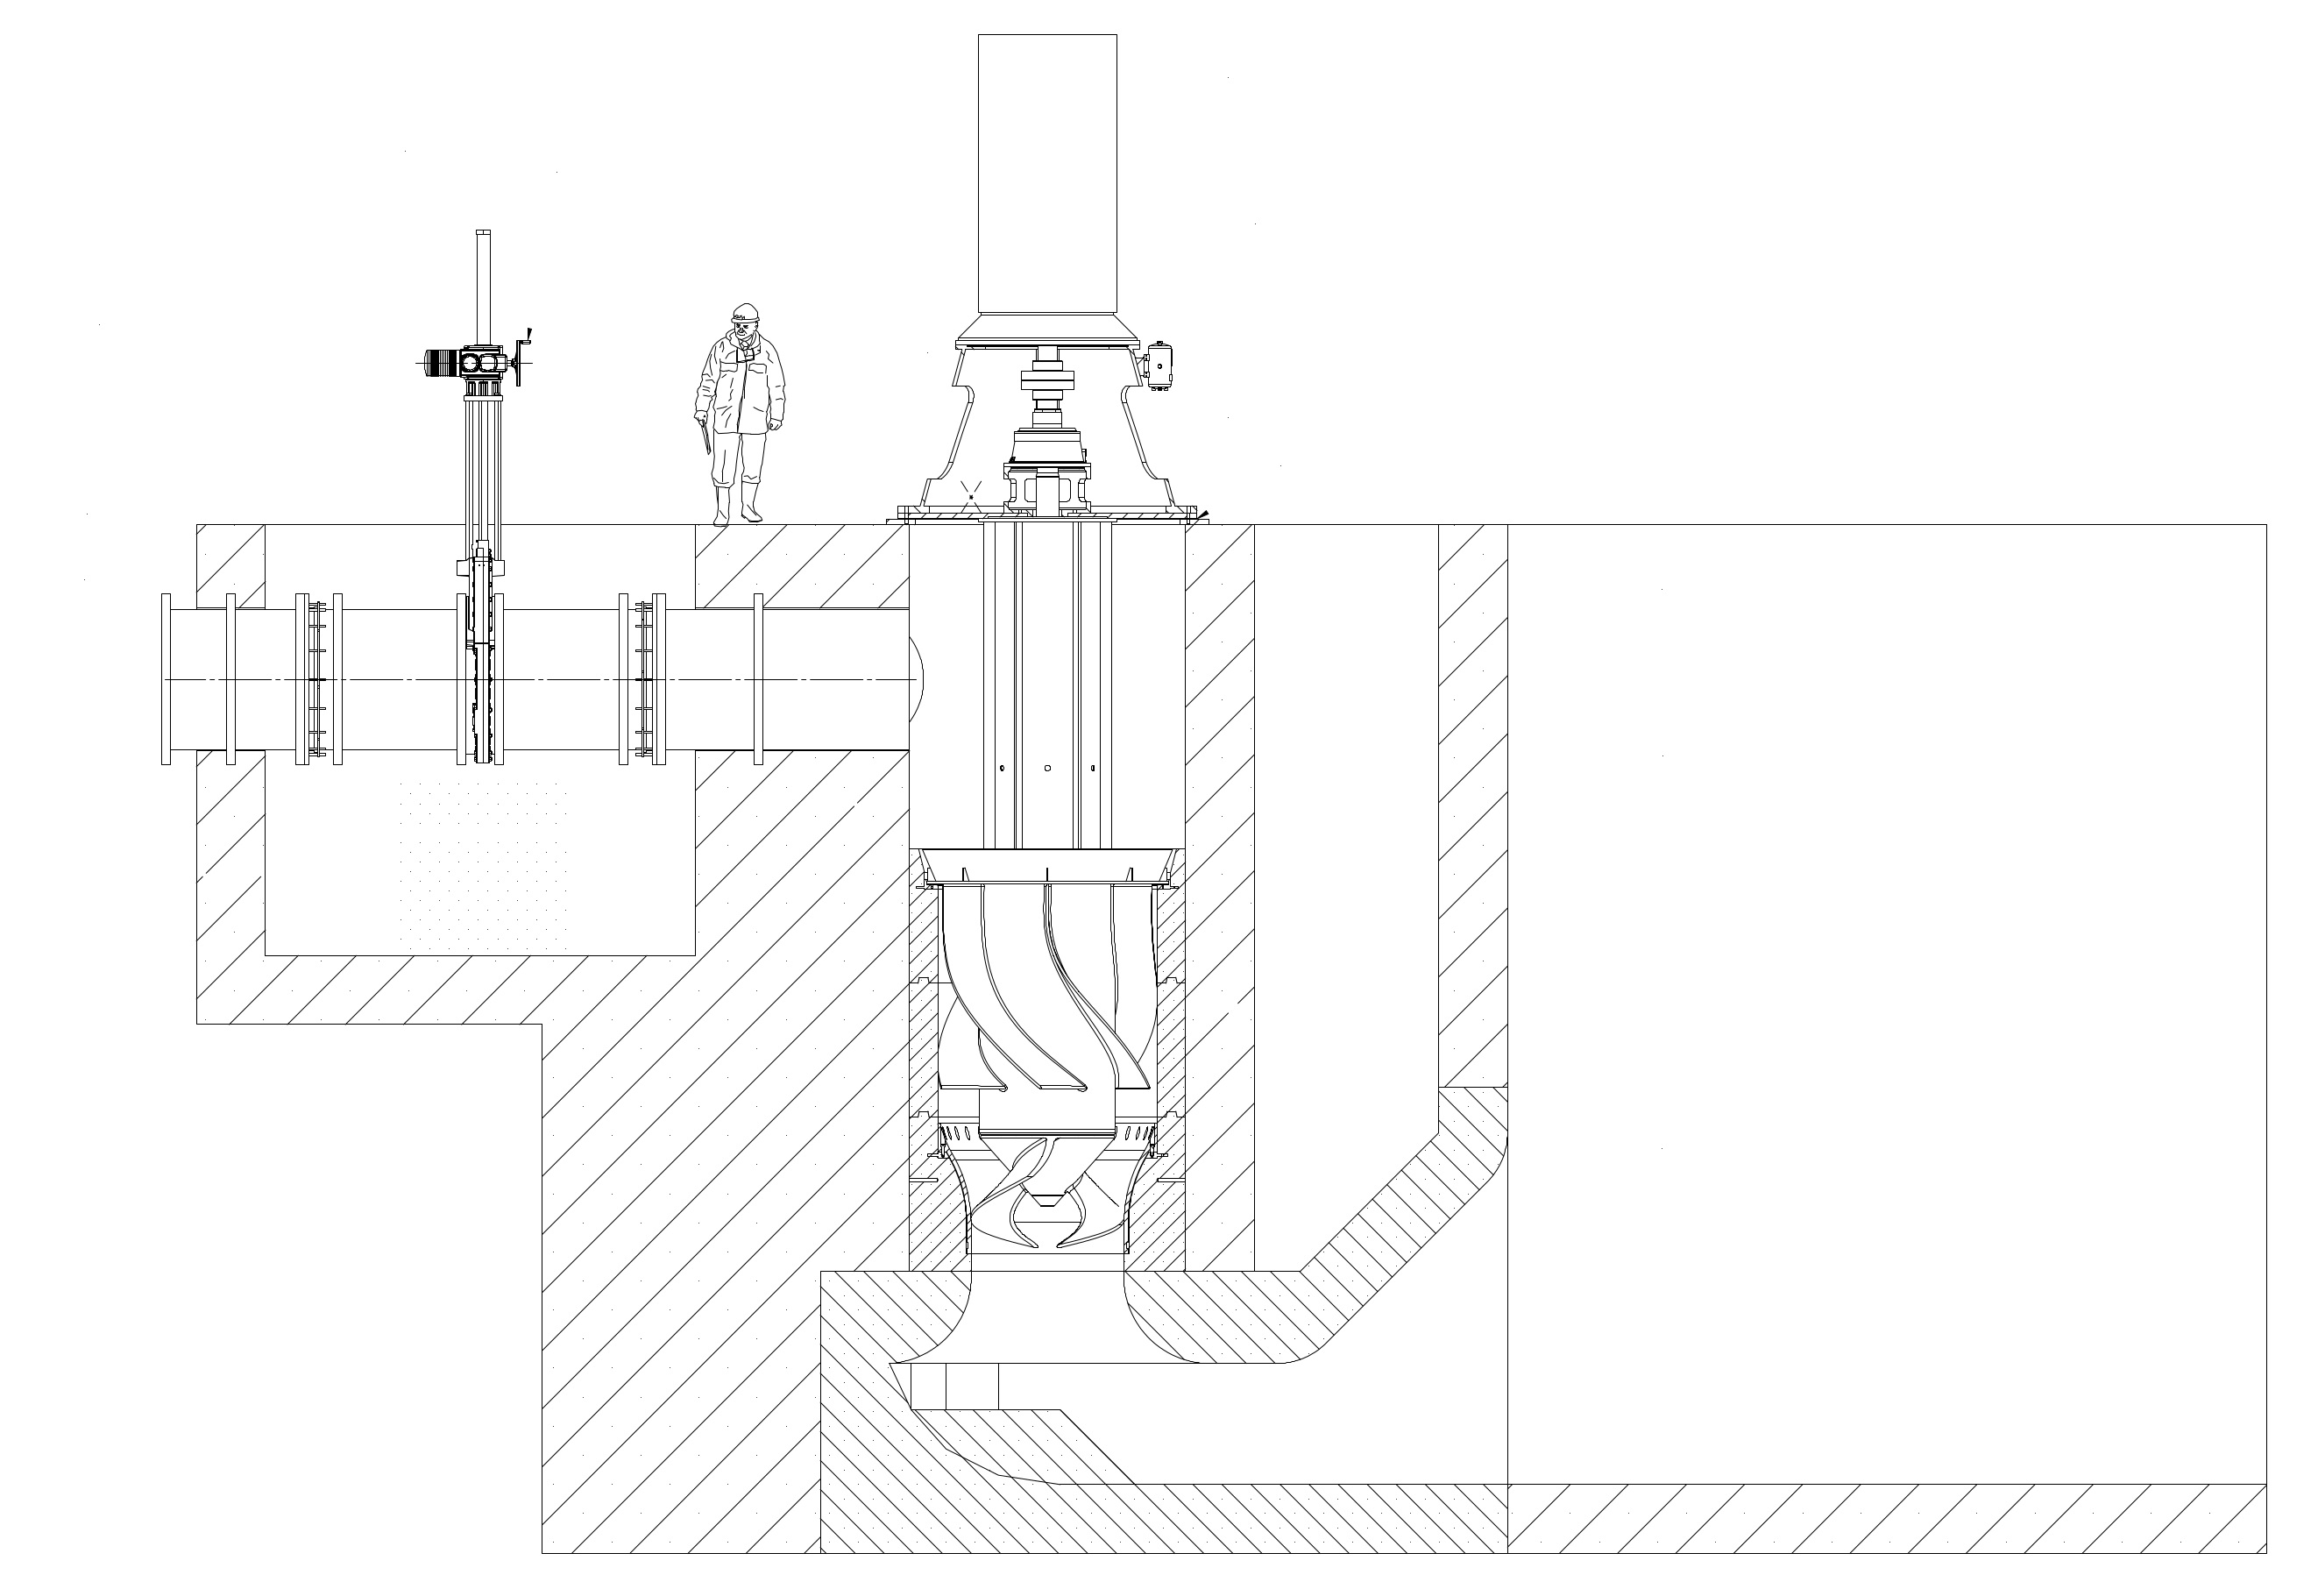 Fig. 2. The general arrangement of the pump.